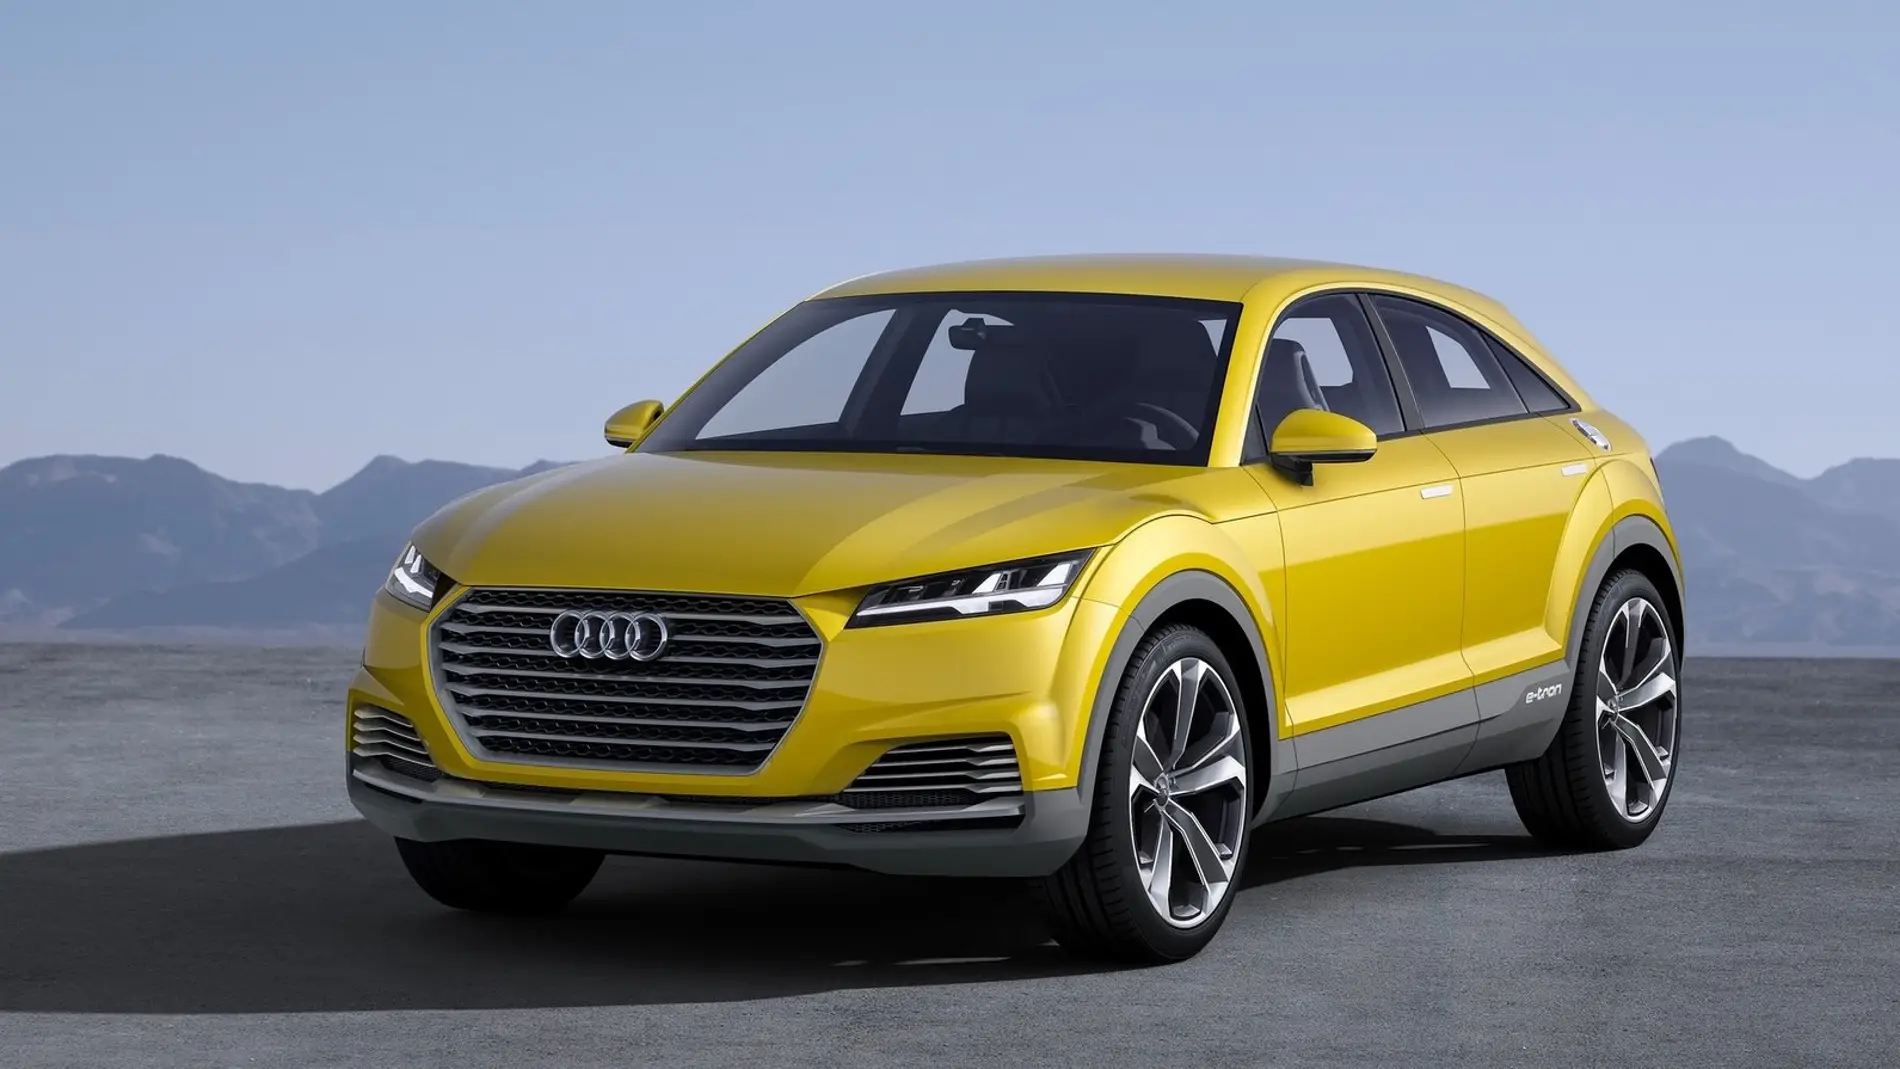 Audi-TT-offroad-concept1.jpg